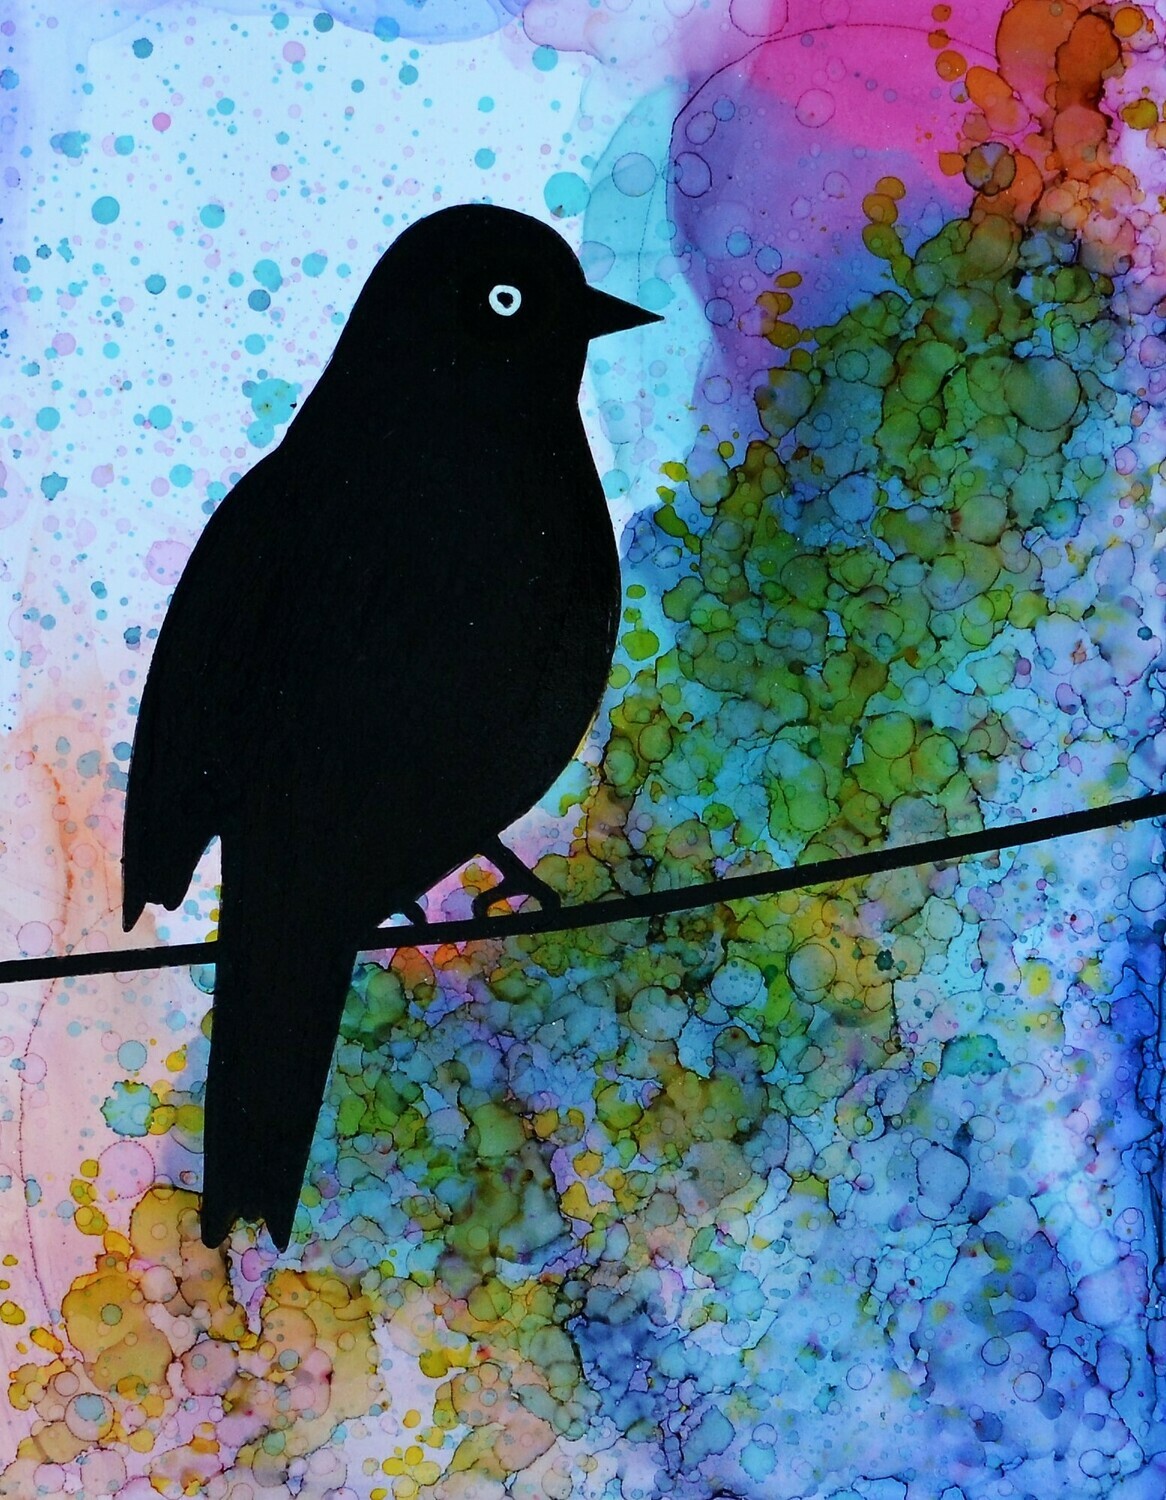 ART PRINT - BIRD SILHOUETTE